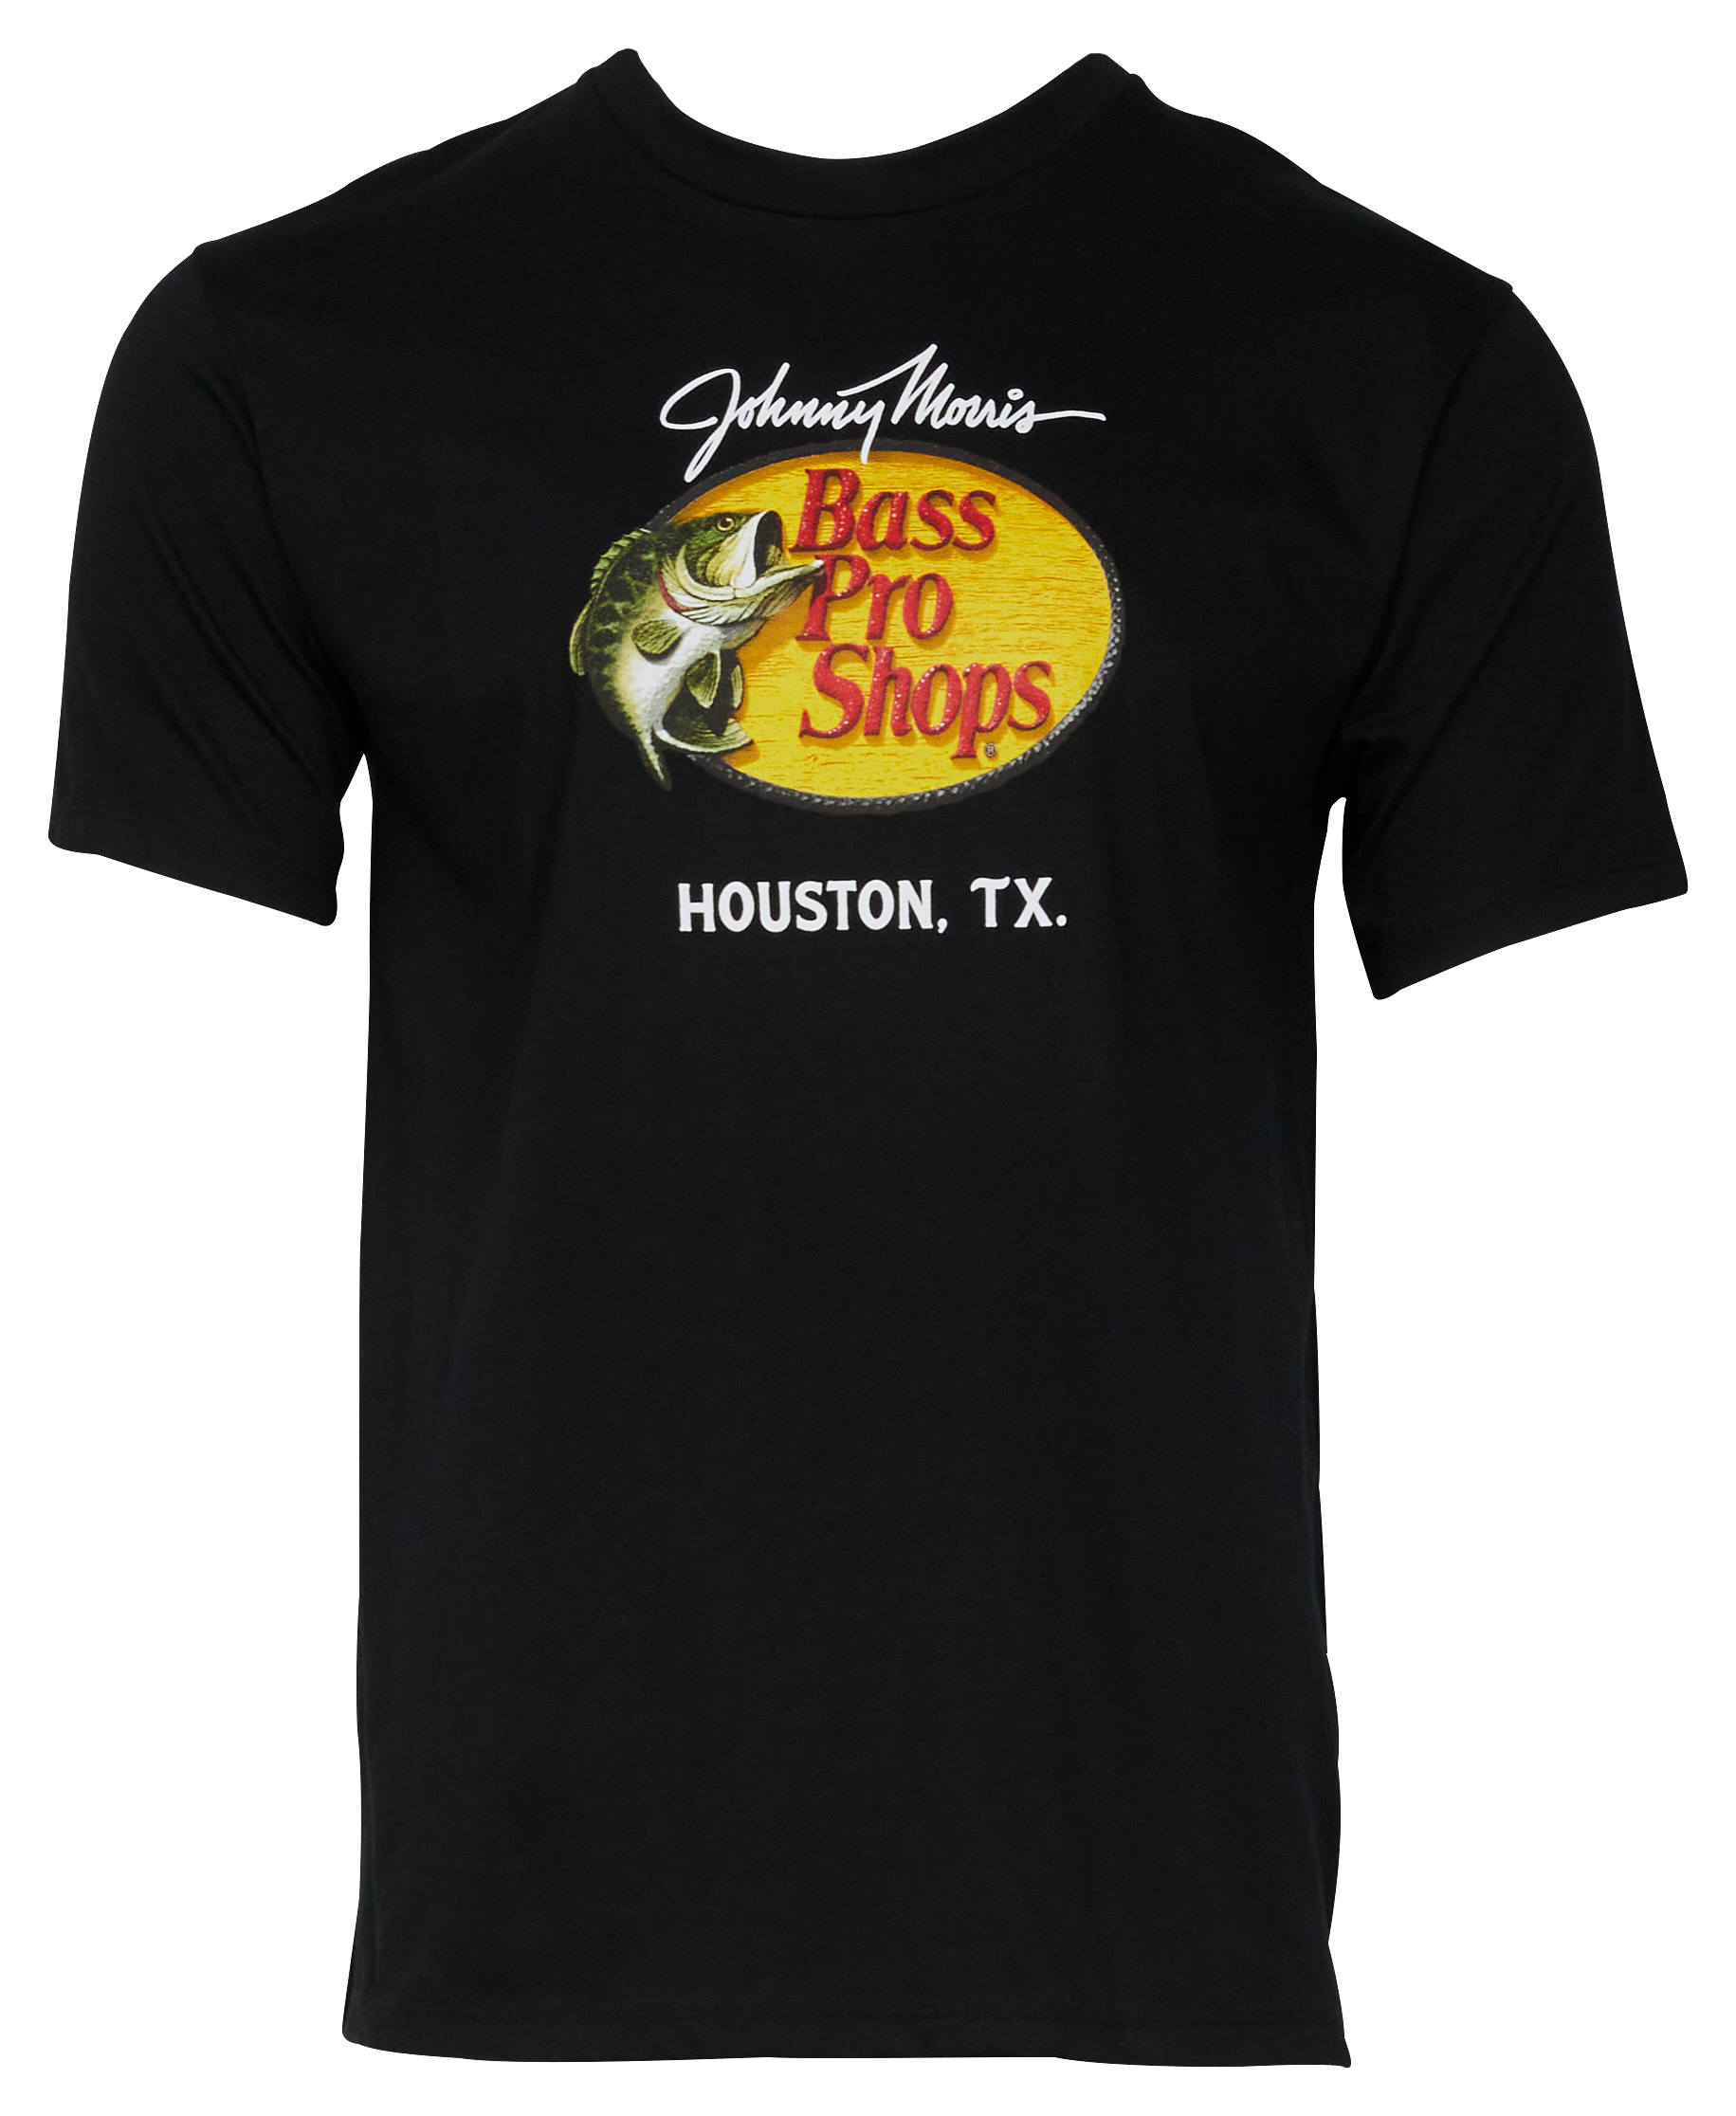 Bass Pro Shops Houston Woodcut Short-Sleeve T-Shirt for Men